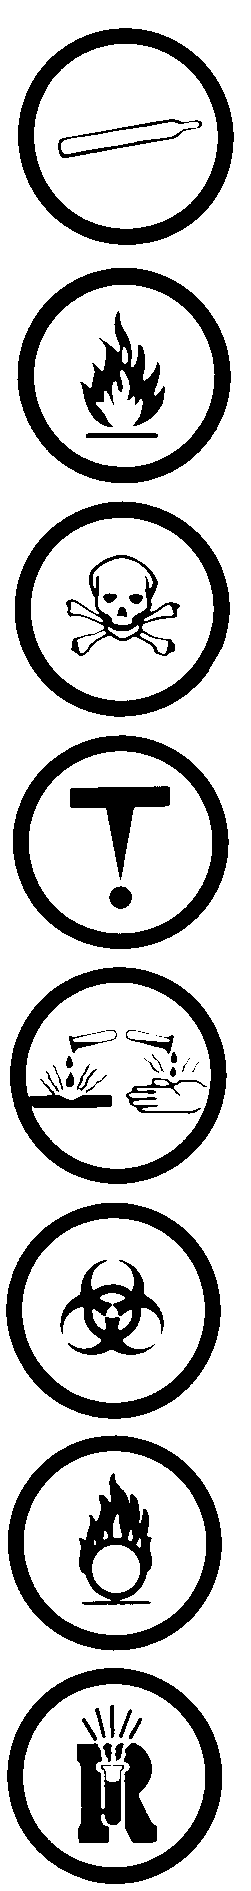 Pictures of the 8 WHMIS symbols